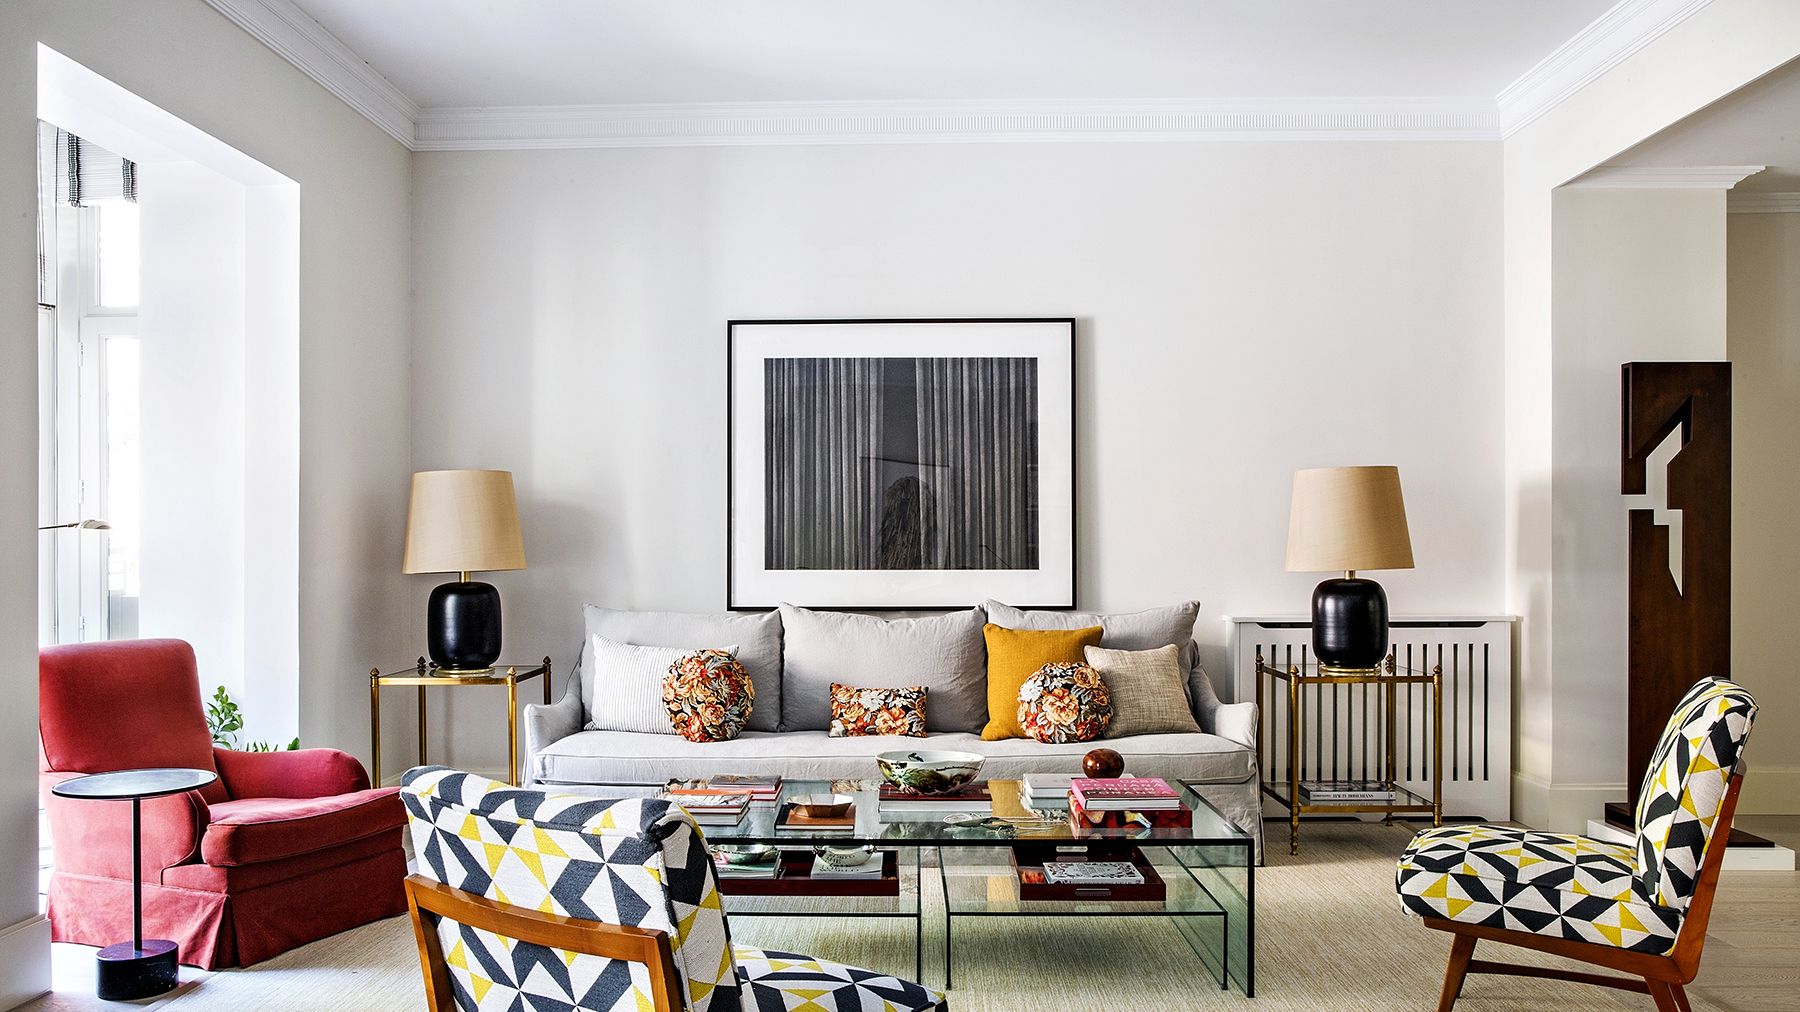 Buscas sofás que aporten color a tus muebles de salón de diseño?